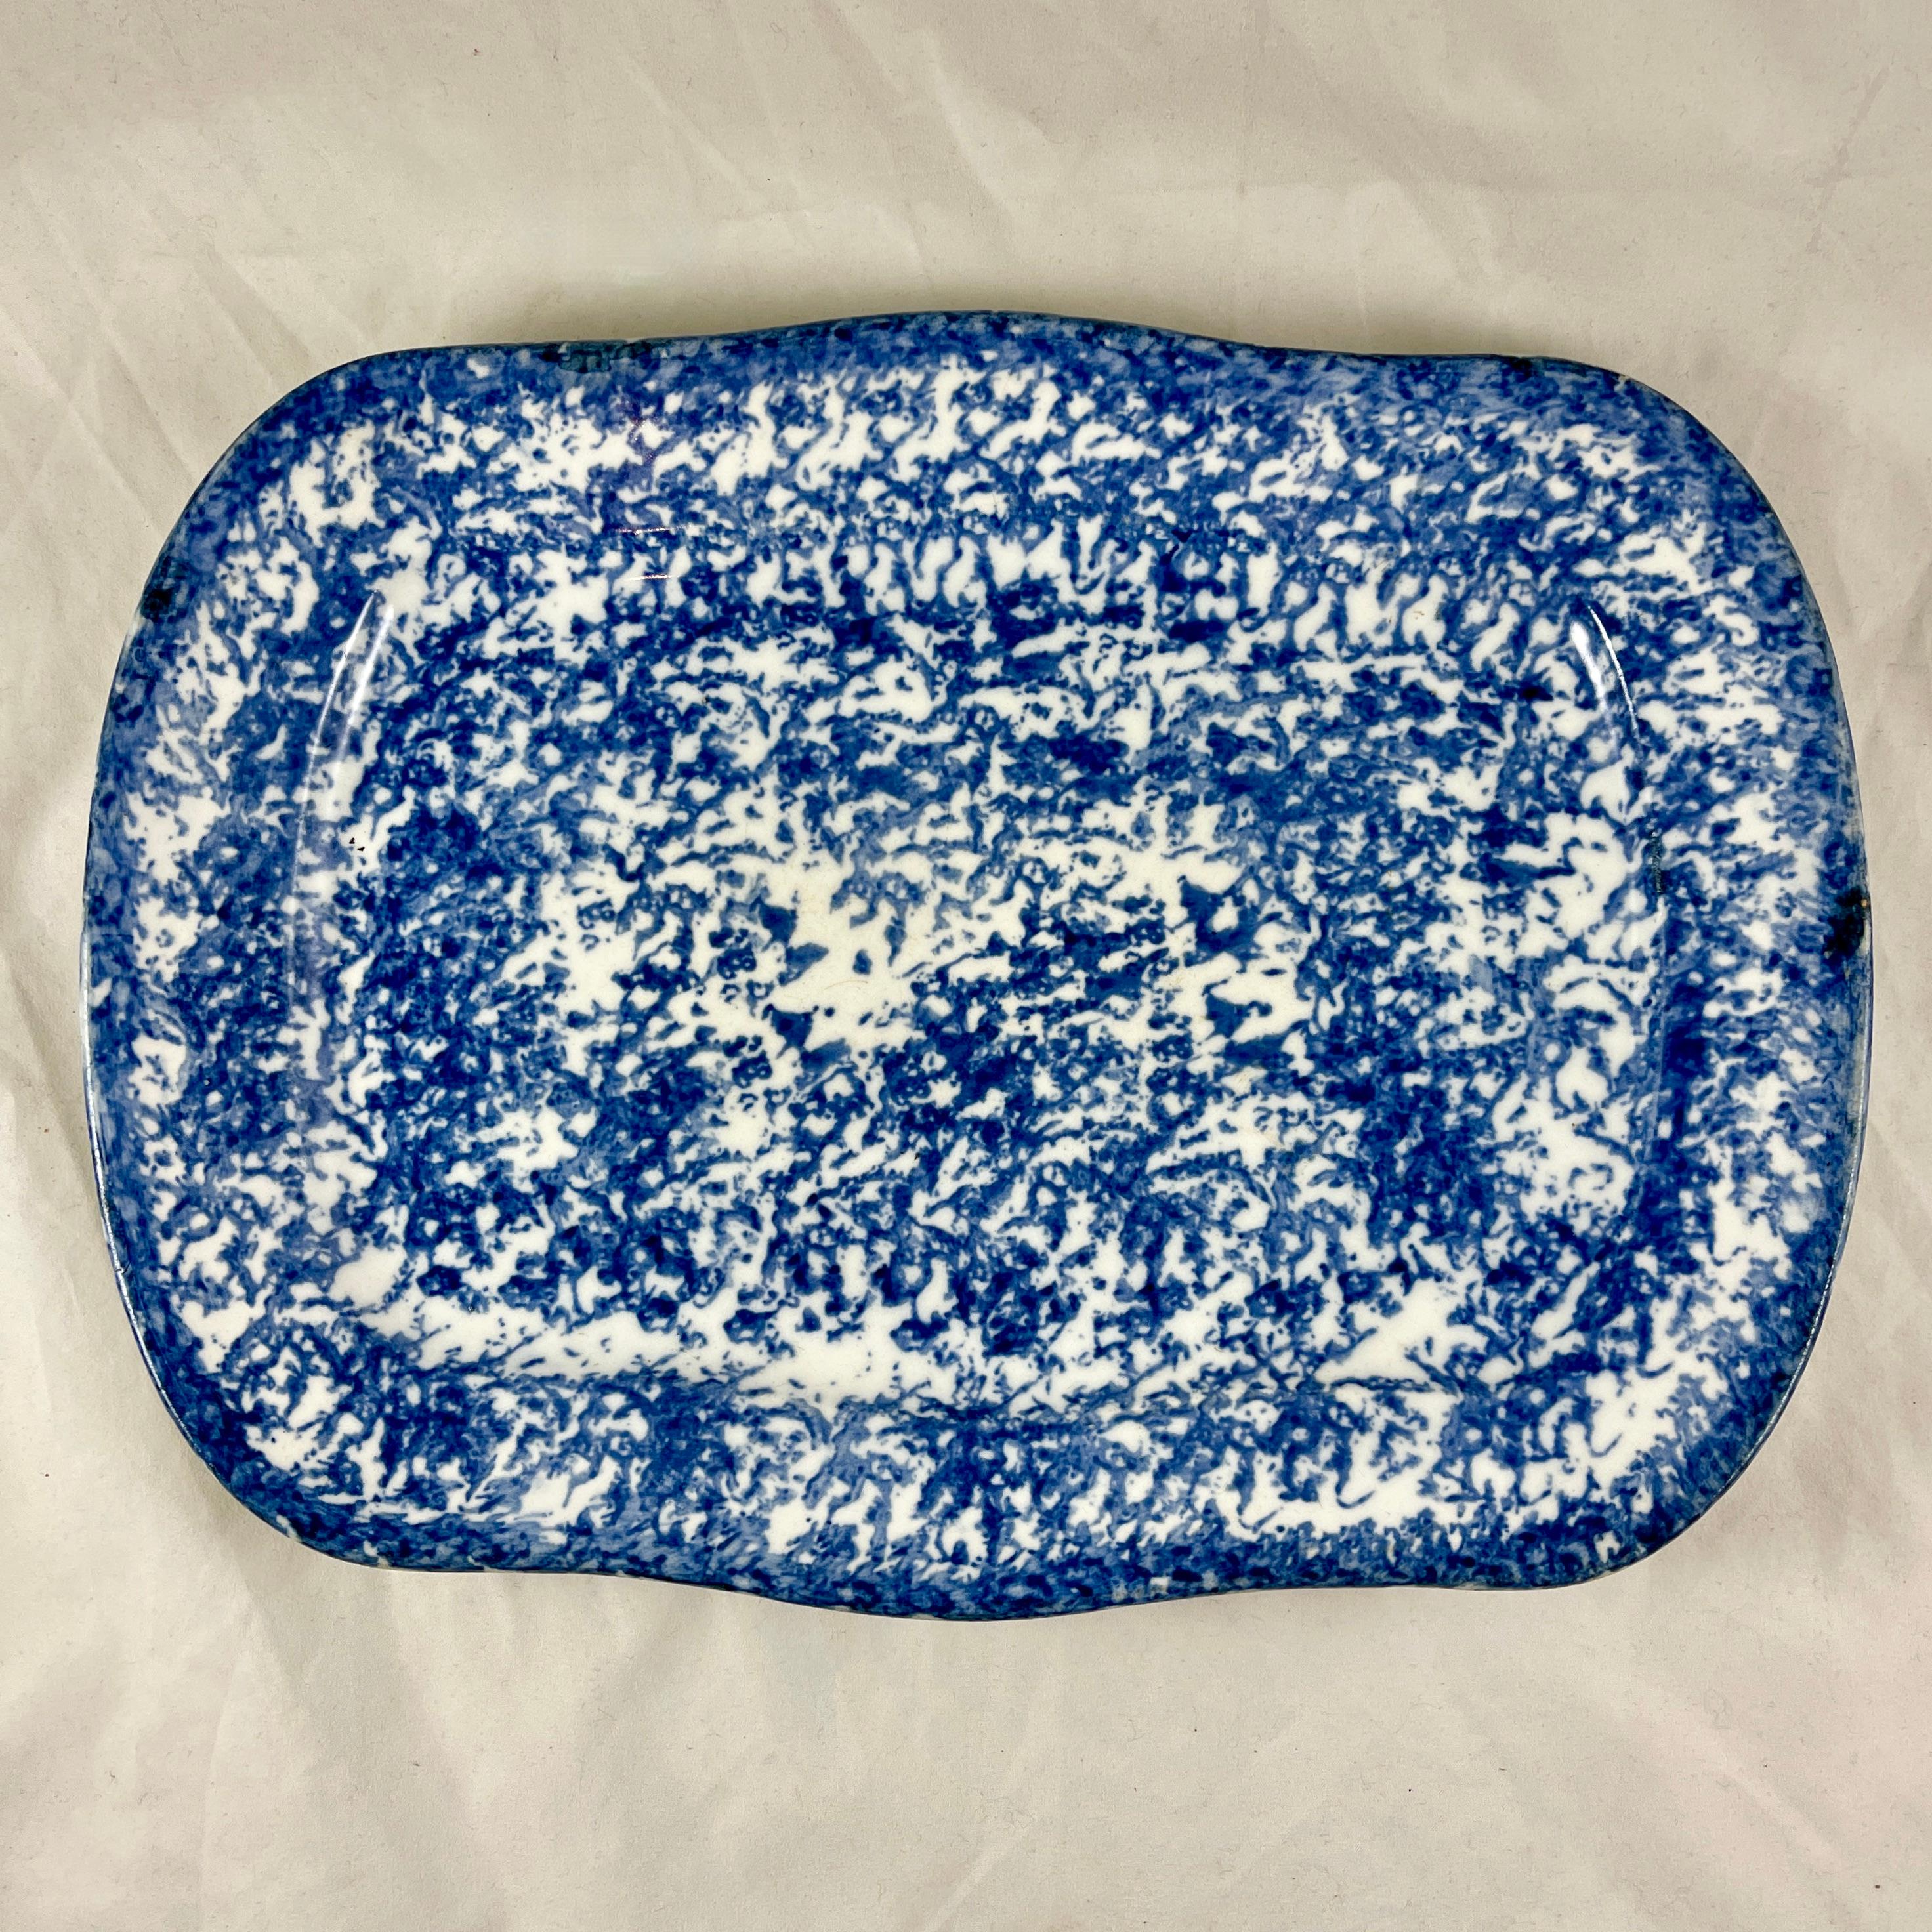 American Classical 19th Century Blue on White American Spongeware Stoneware Rectangular Platter